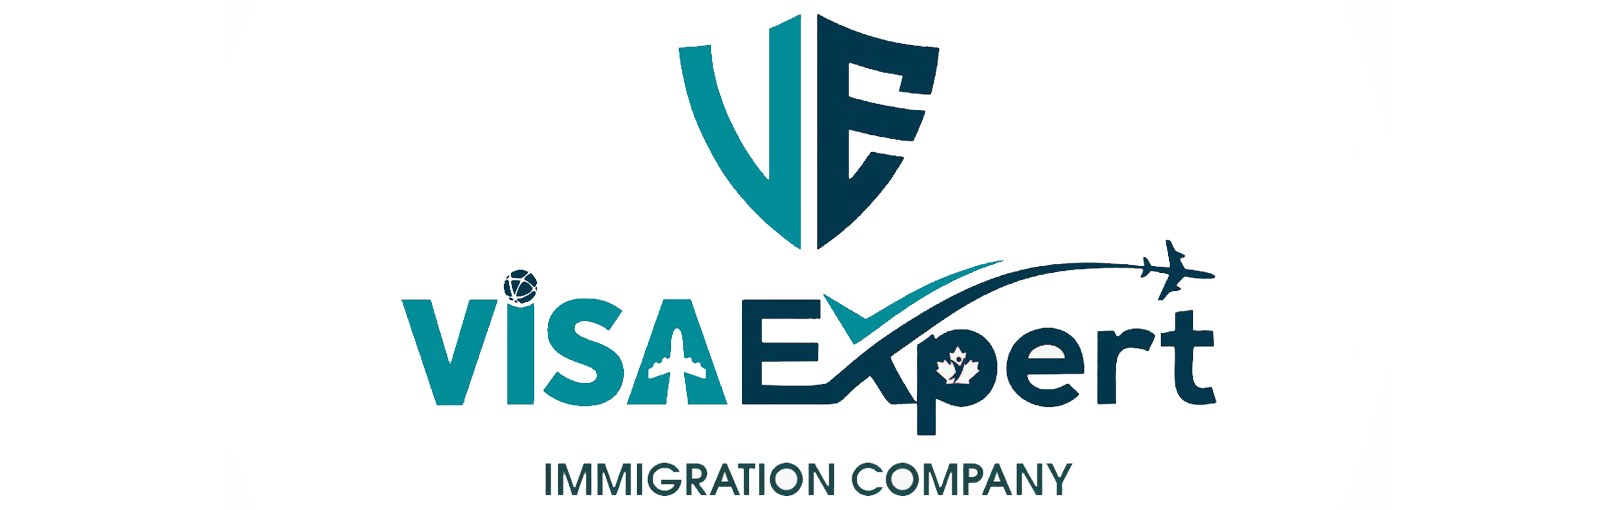 Visa Expert Immigration Company|Architect|Professional Services